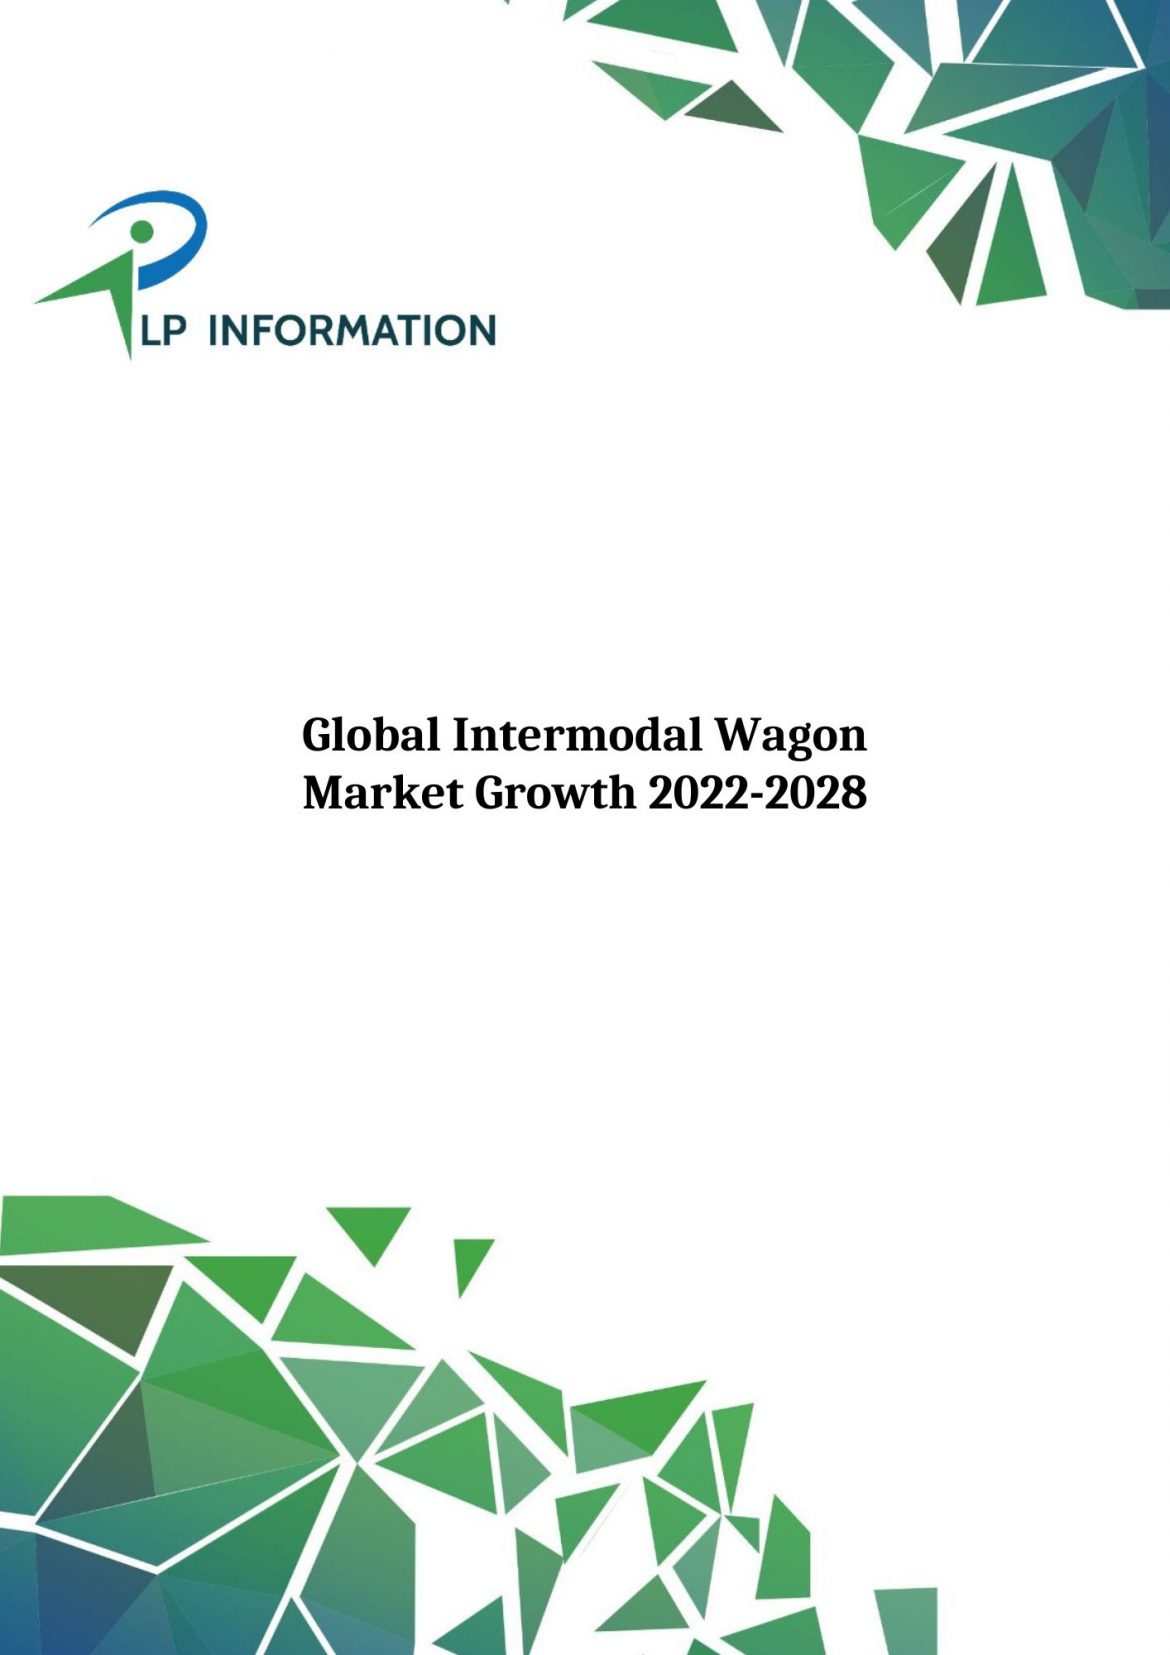 Global Intermodal Wagon Market Growth 2022-2028